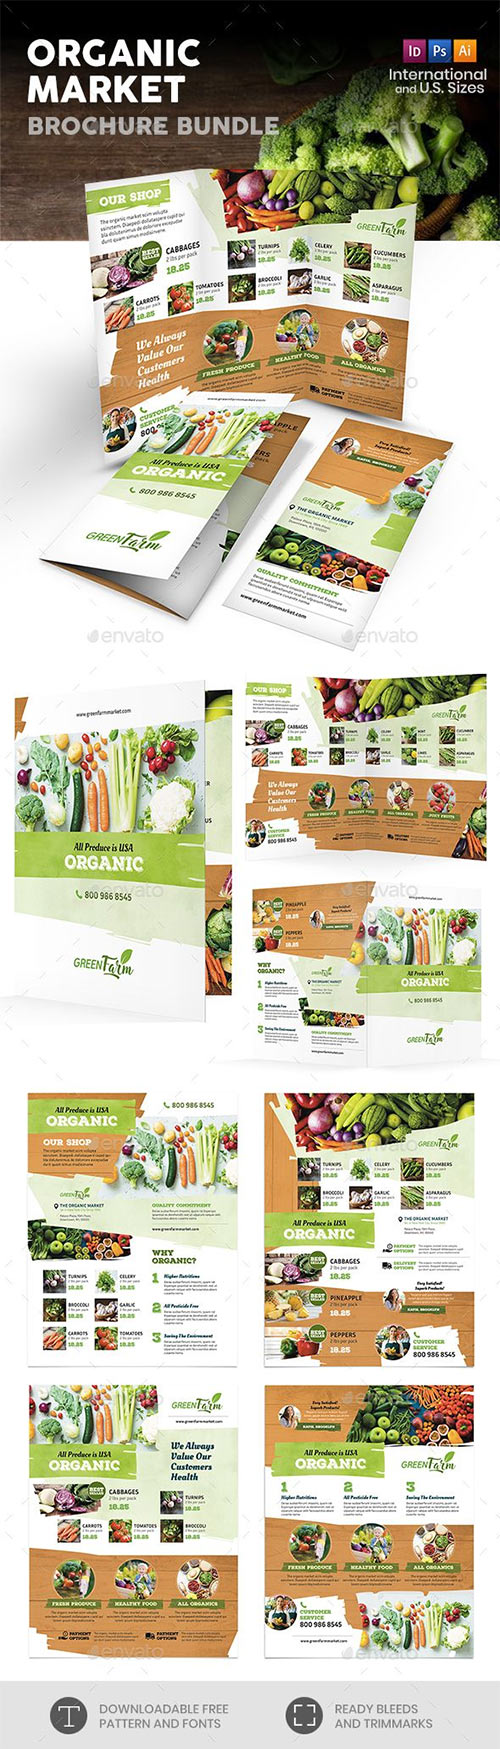 Organic Market Trifold Brochure 3